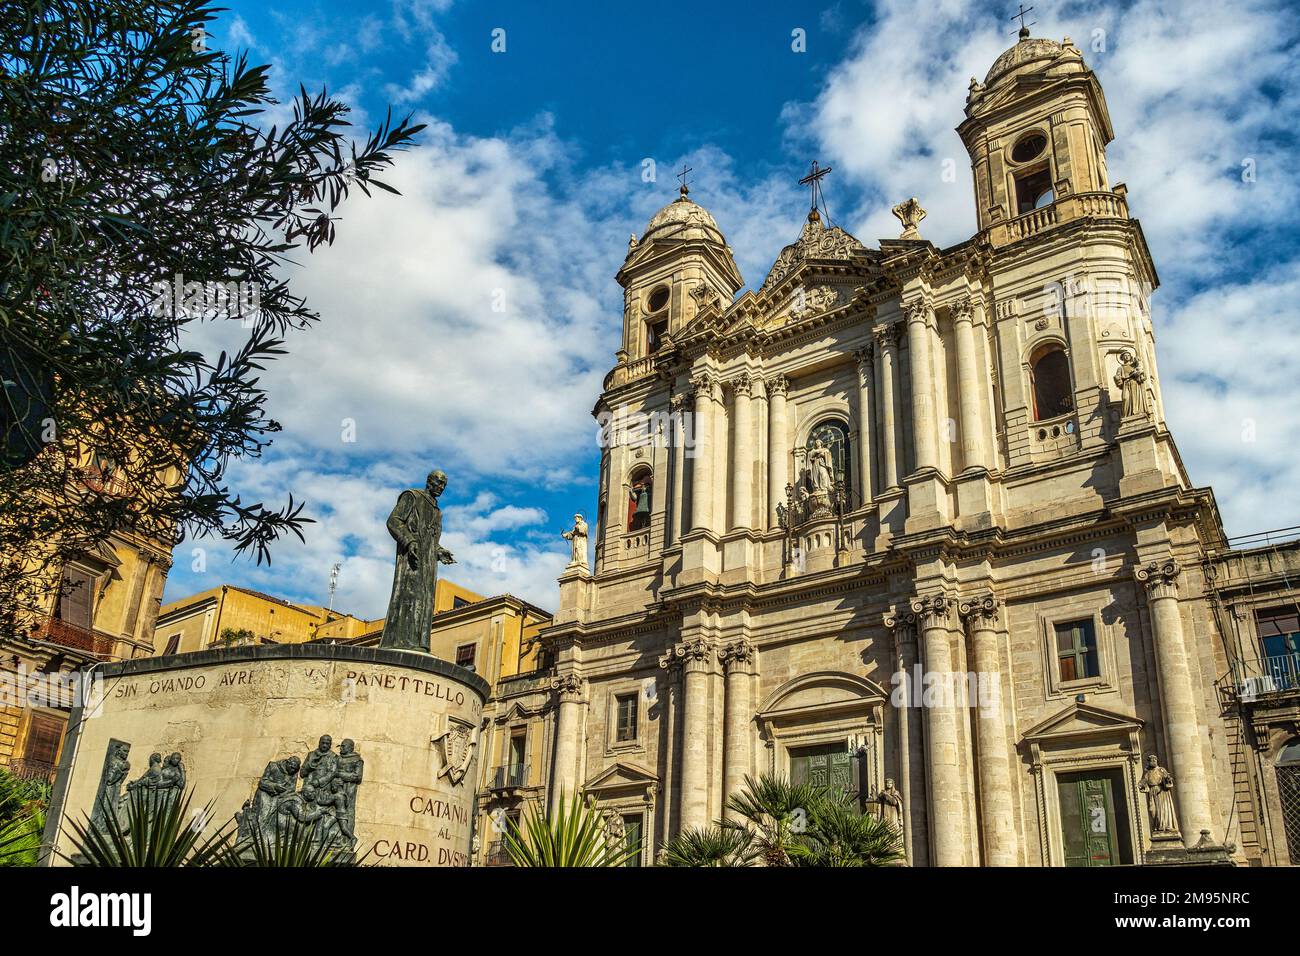 Die Fassade der Kirche San Francesco d'Assisi all'Immacolata mit der Statue von Kardinal Giuseppe Benedetto Dusmet. Catania, Sizilien, Italien Stockfoto